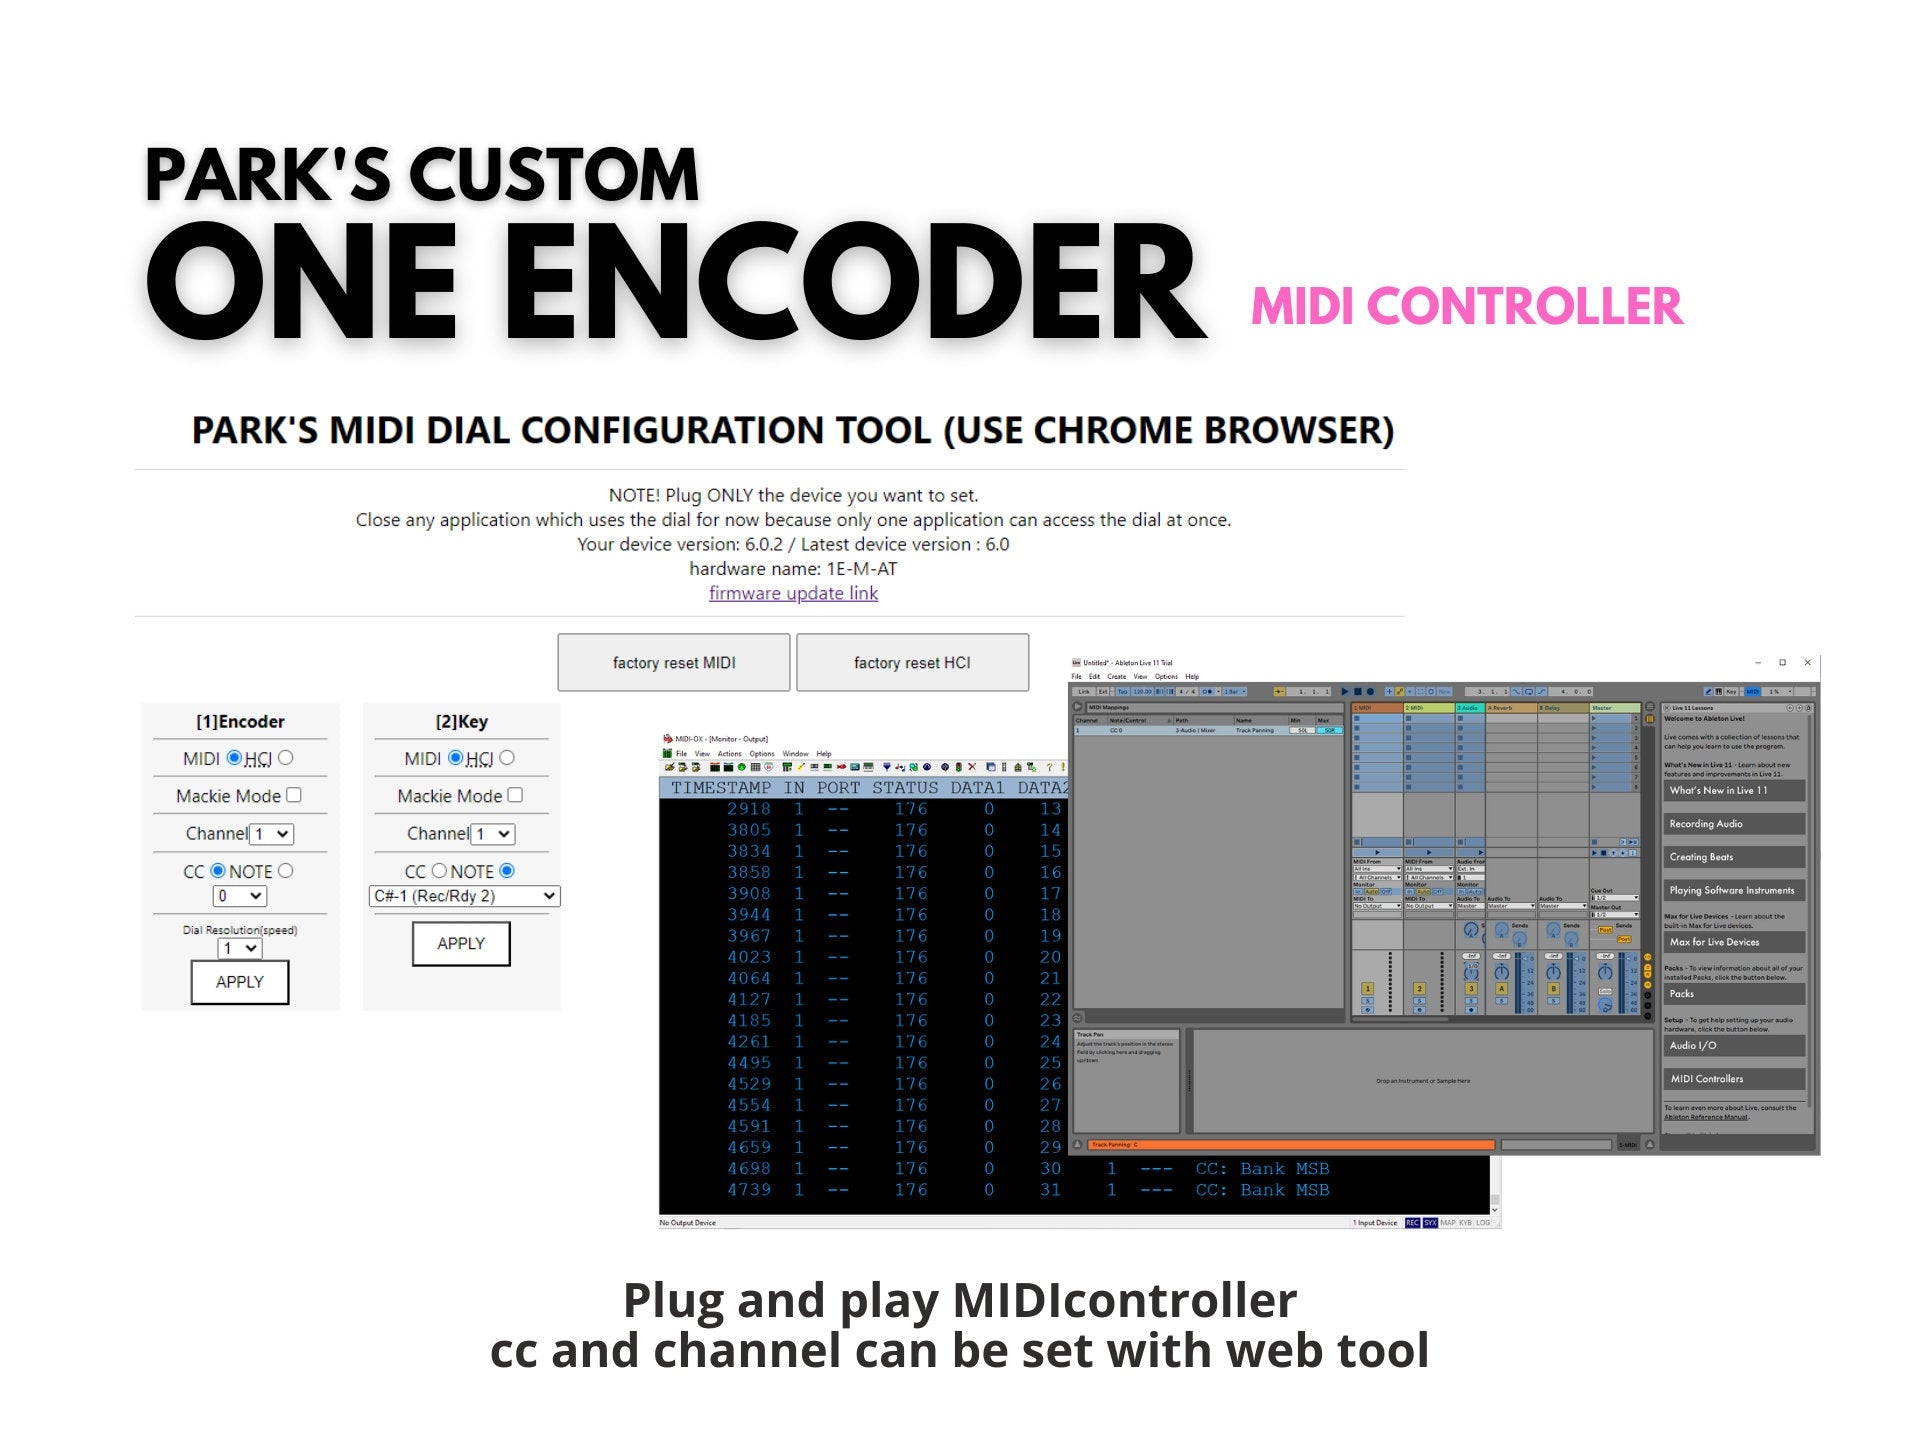 Park's Custom Dial kit / customizable keyboard / volume, media control / Adobe / craft, macro pad, MIDI controller / diy / sound devices